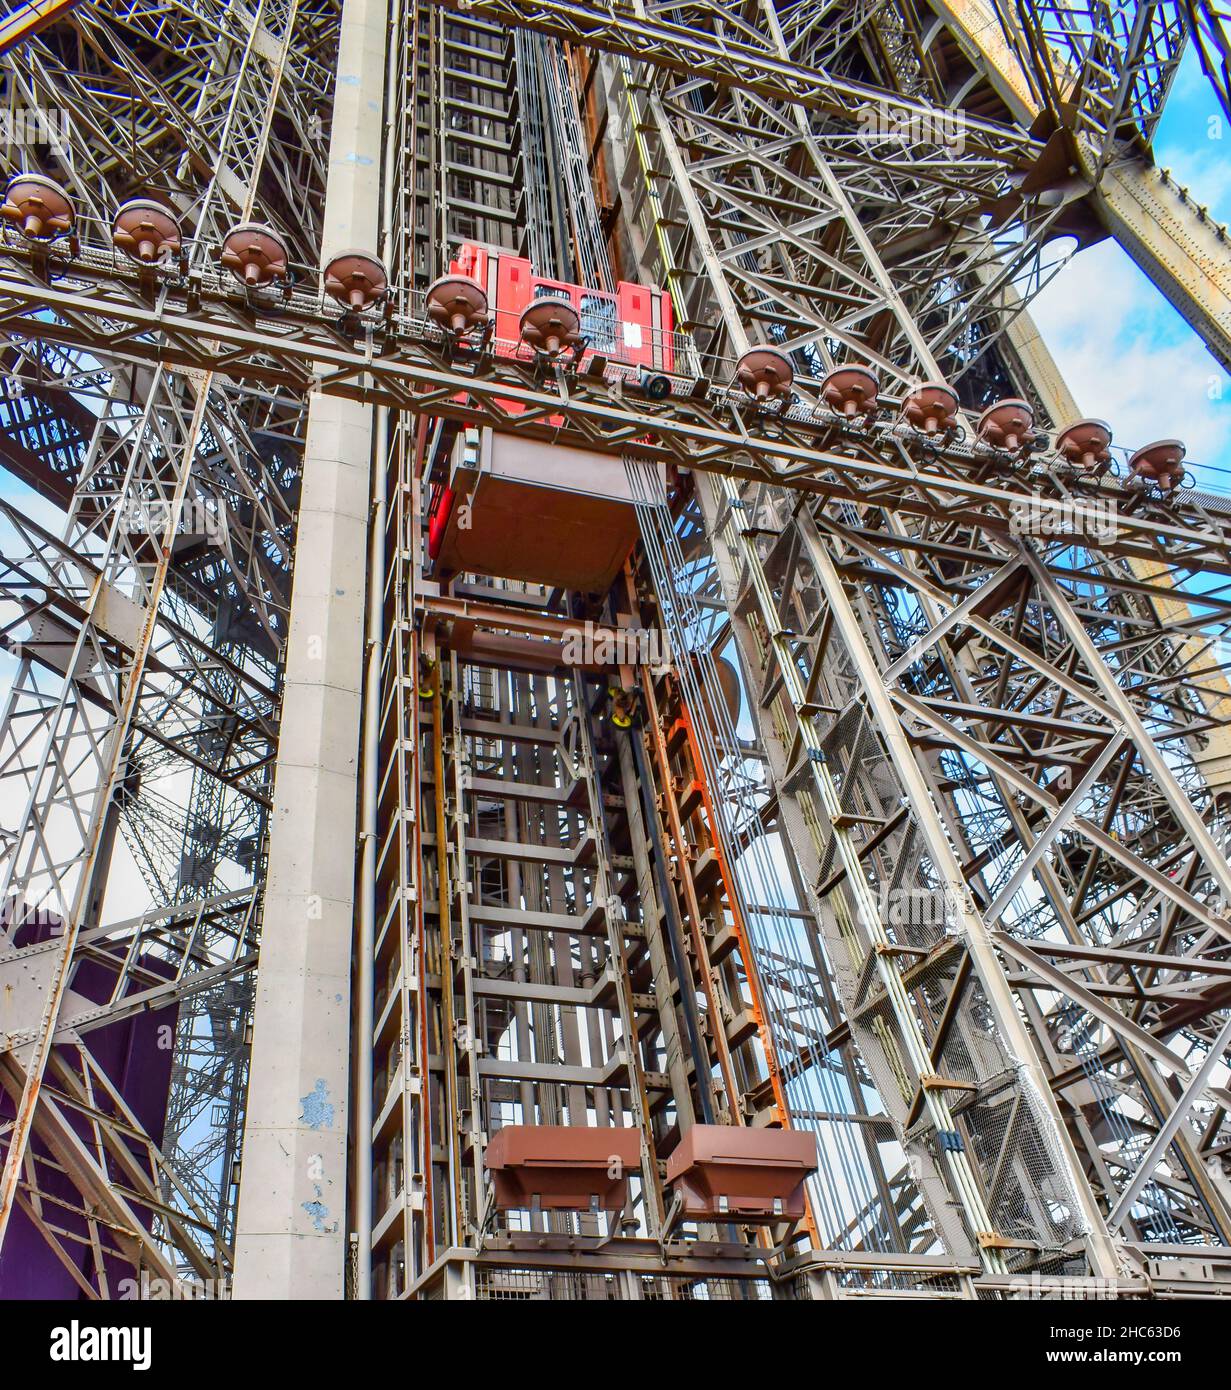 Ascensor elevador y estructura metálica de la torre Eiffel de Paris, Francia Banque D'Images